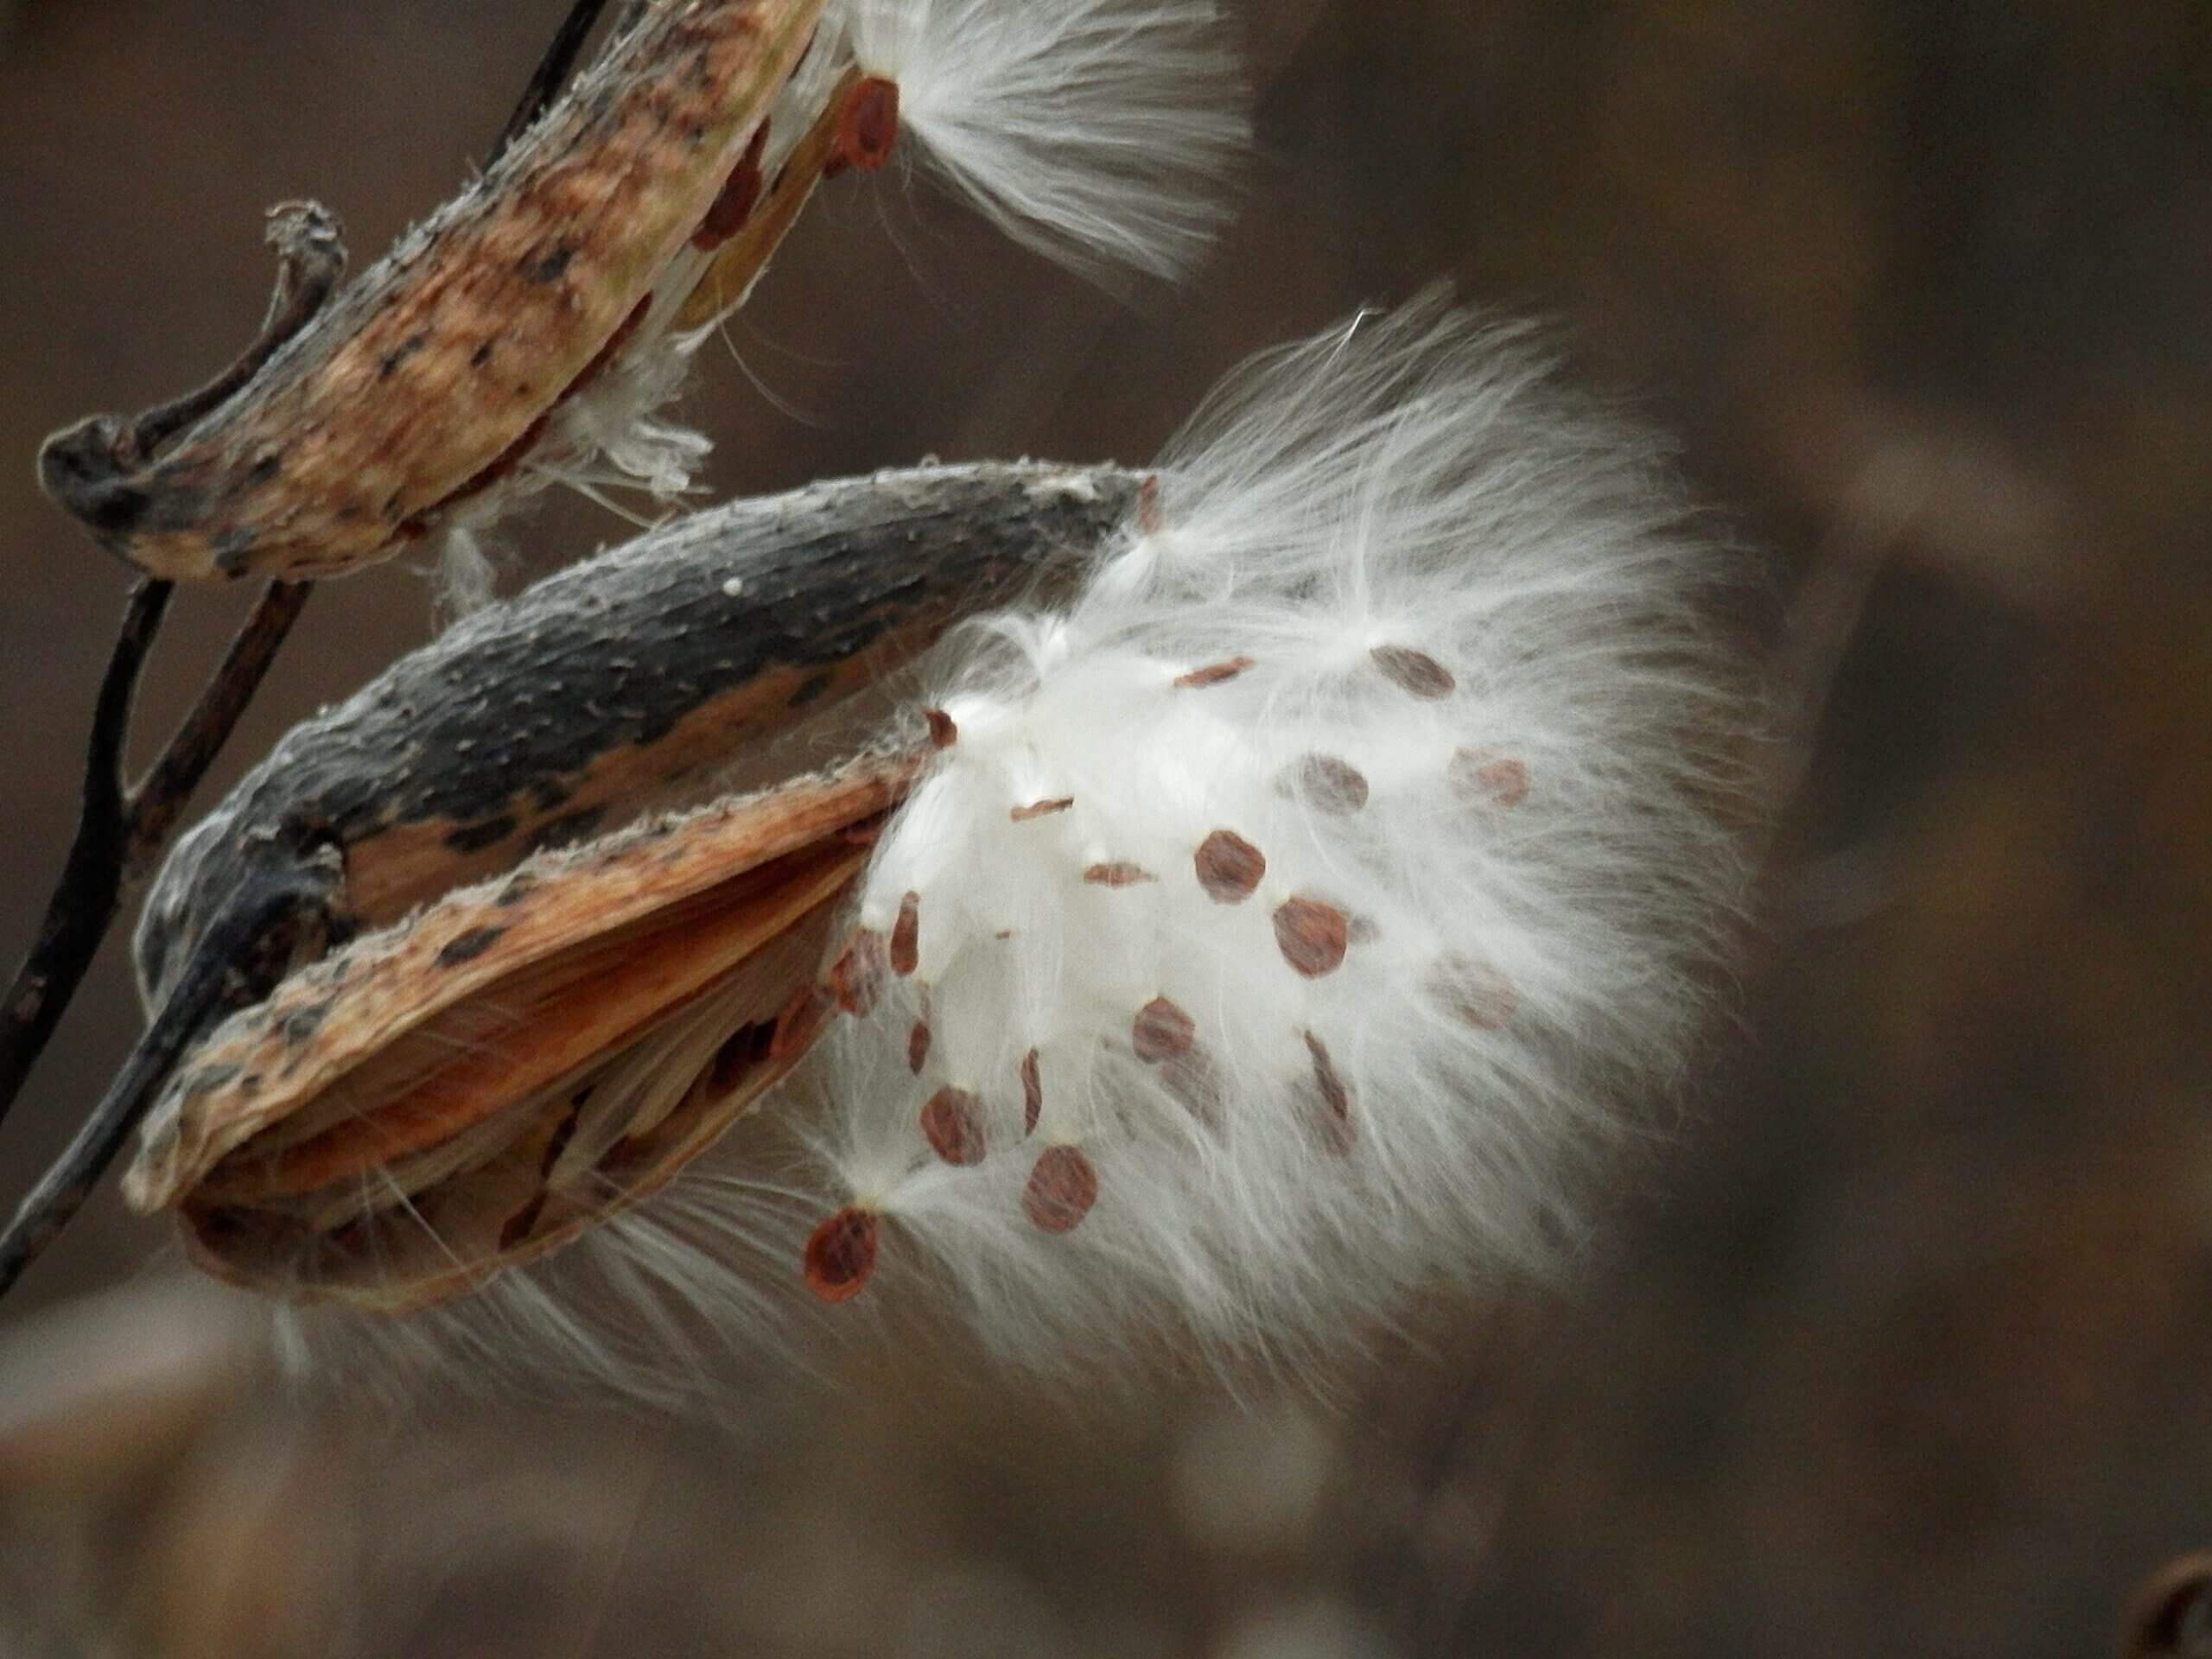 Seeds ready to catch the next breeze; common milkweed, Asclepias syriaca. Photo Ryan Hodnett